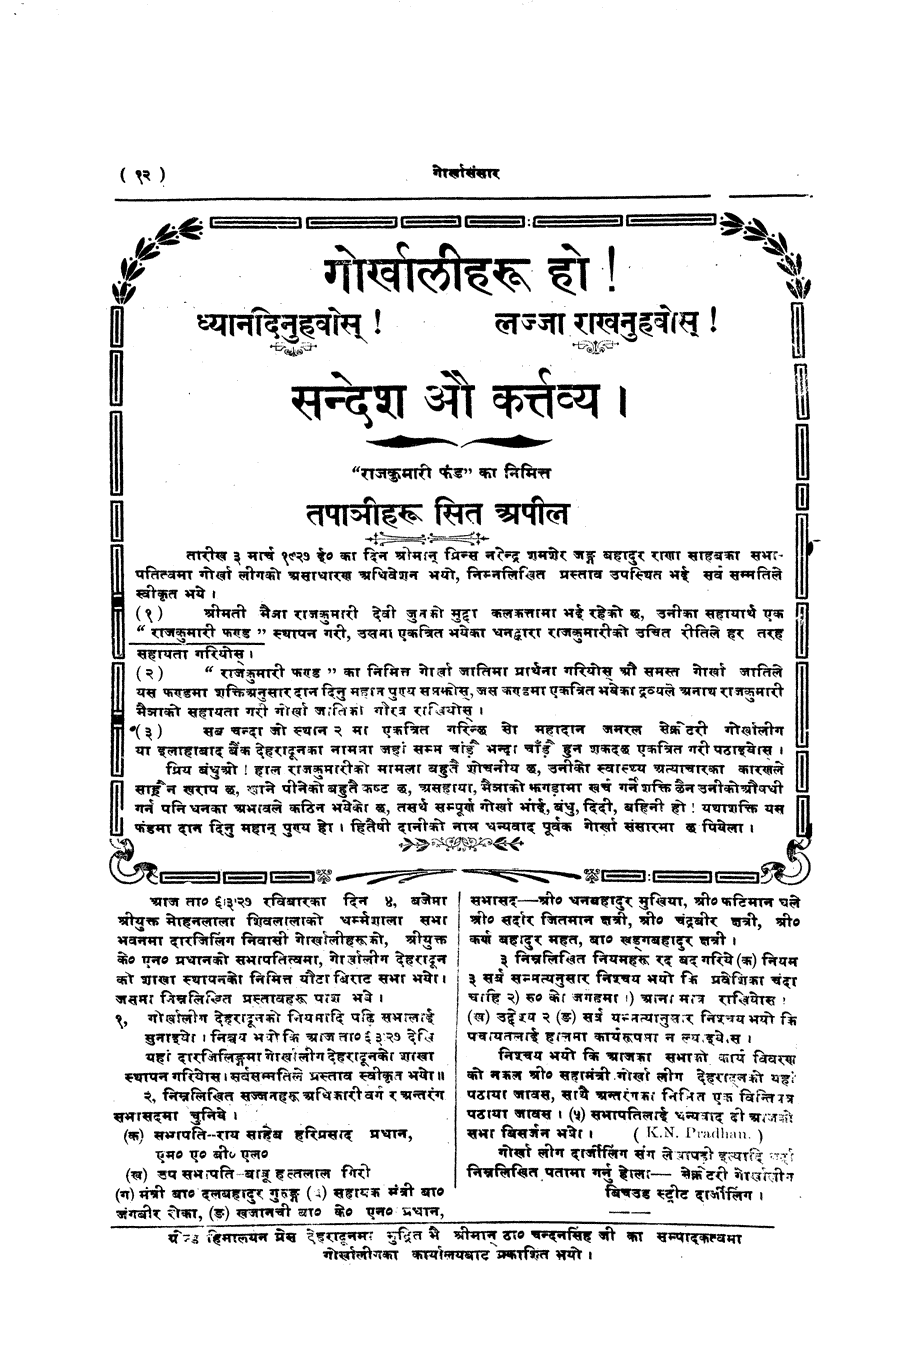 Gorkha Sansar, 15 Mar 1927, page 12